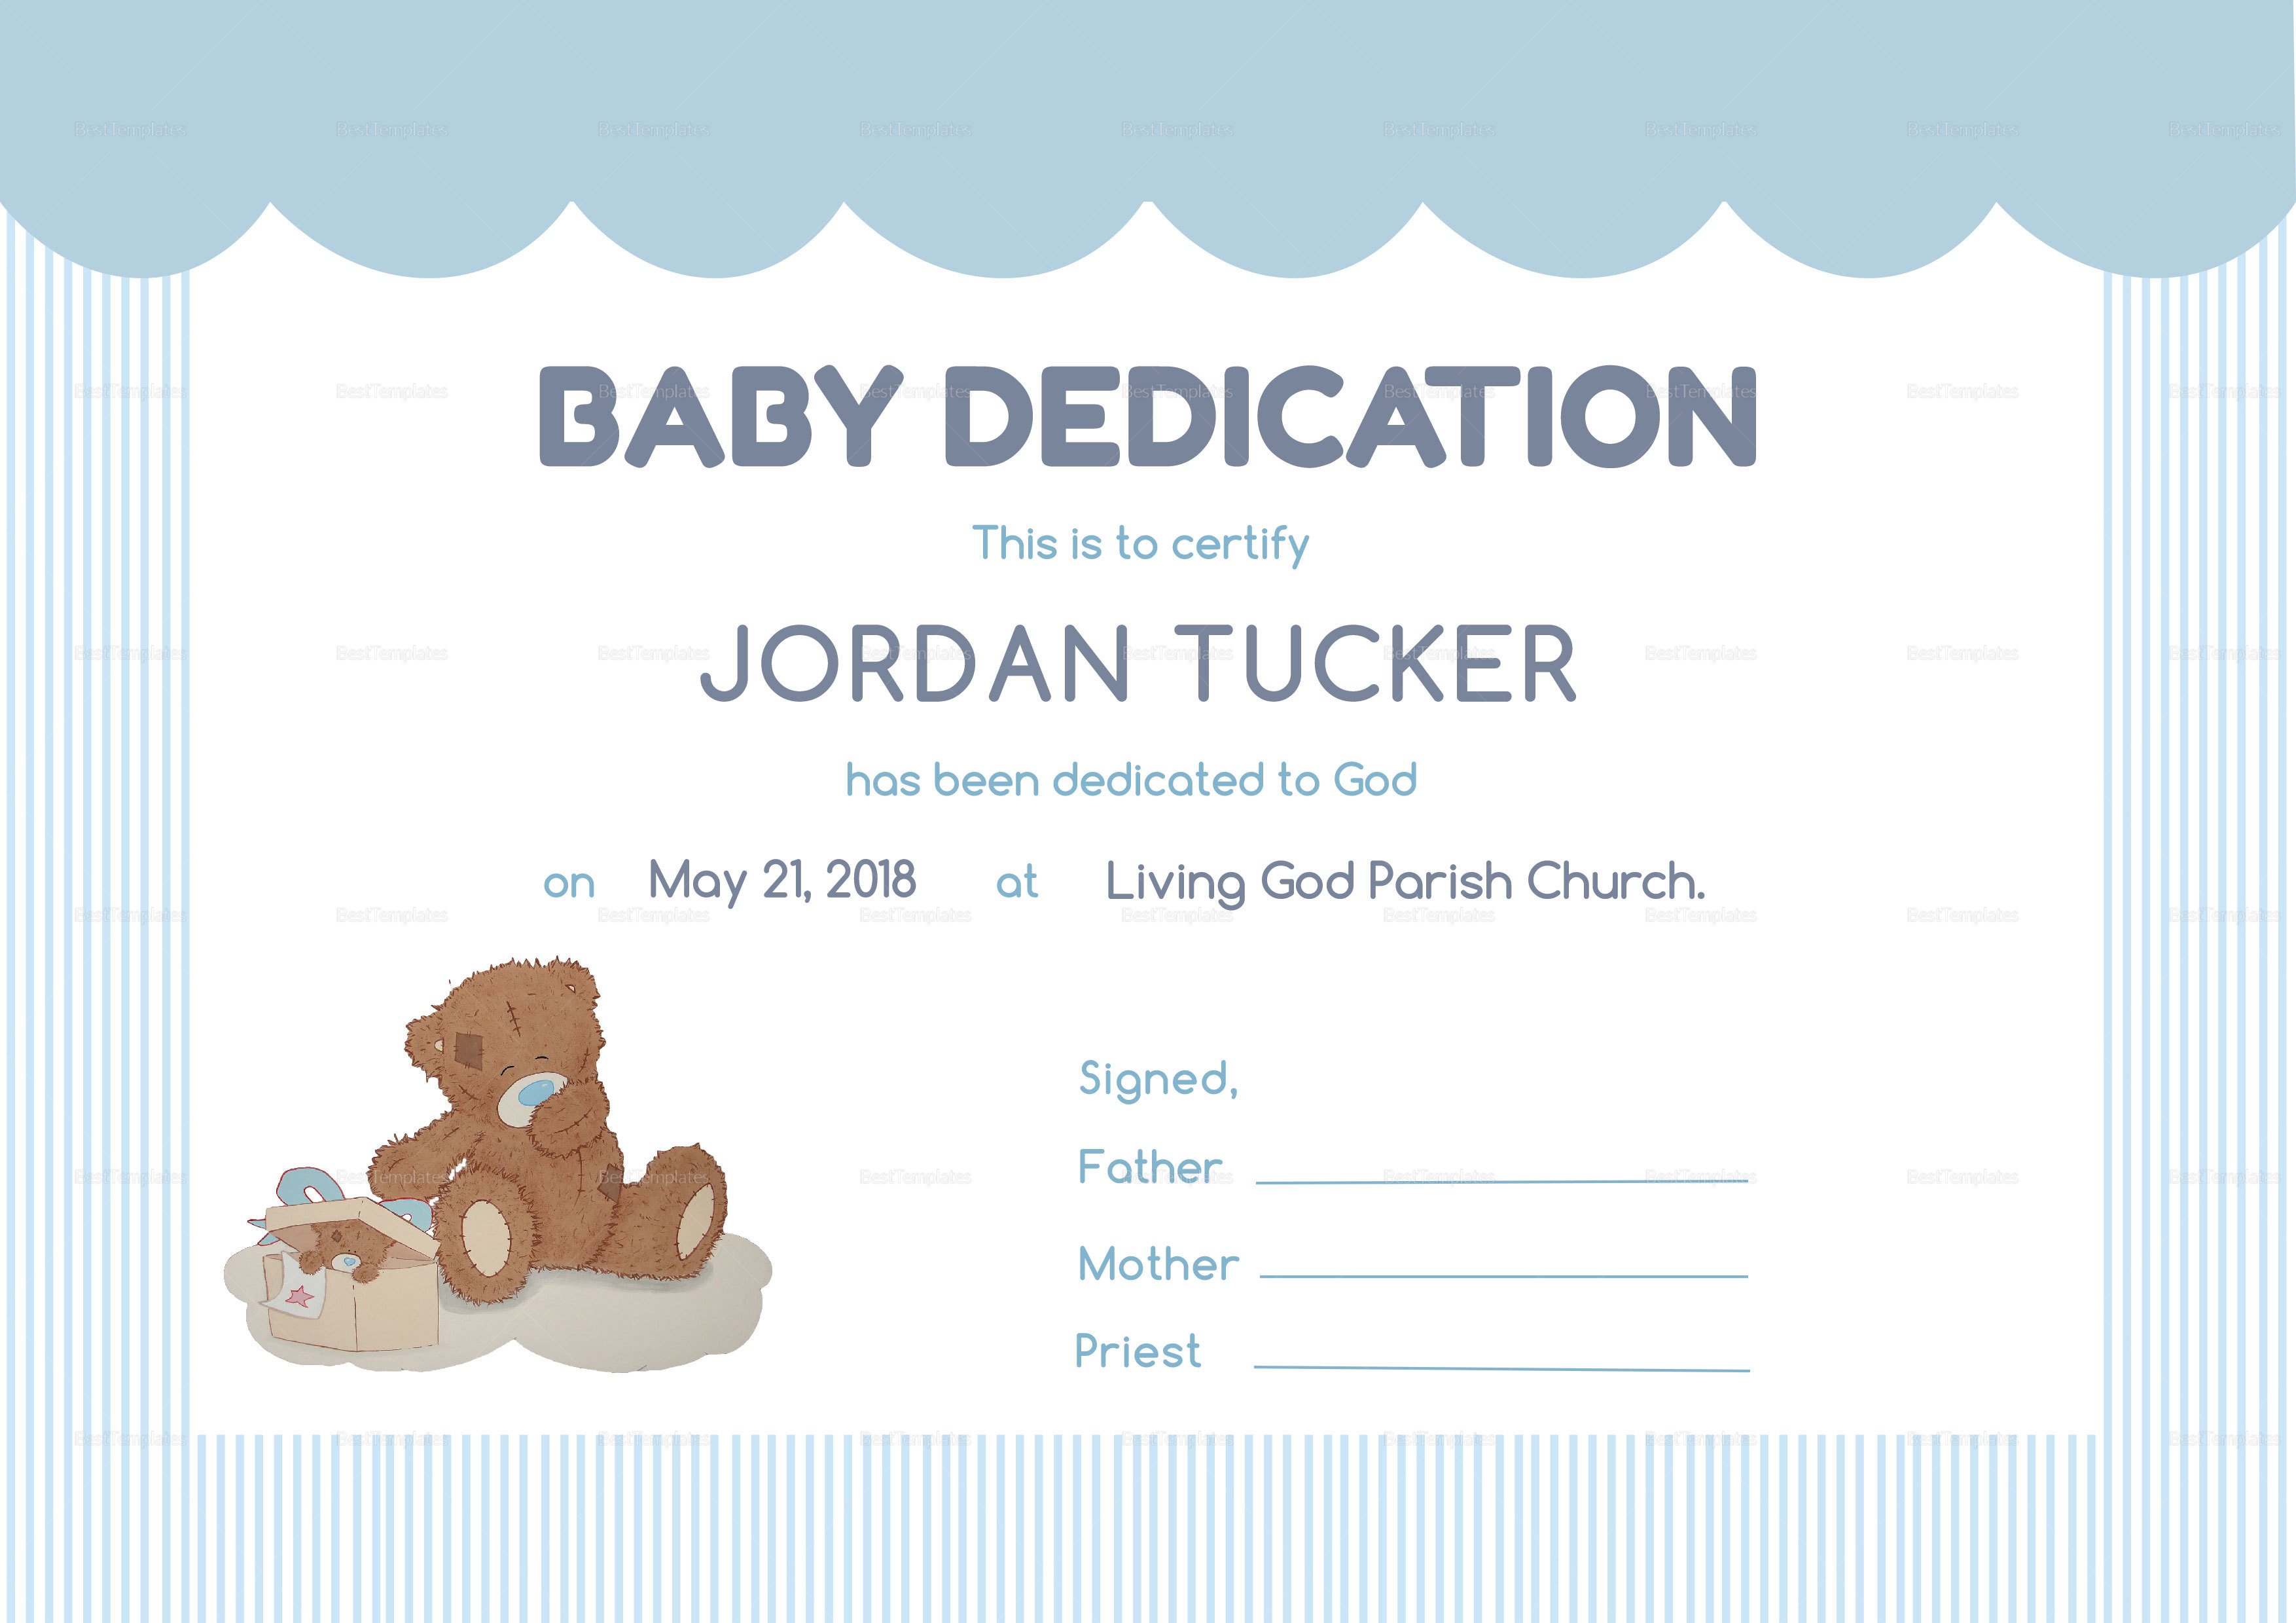 Baby Dedication Certificate Templates Baby Dedication Certificate Design Template In Psd Word